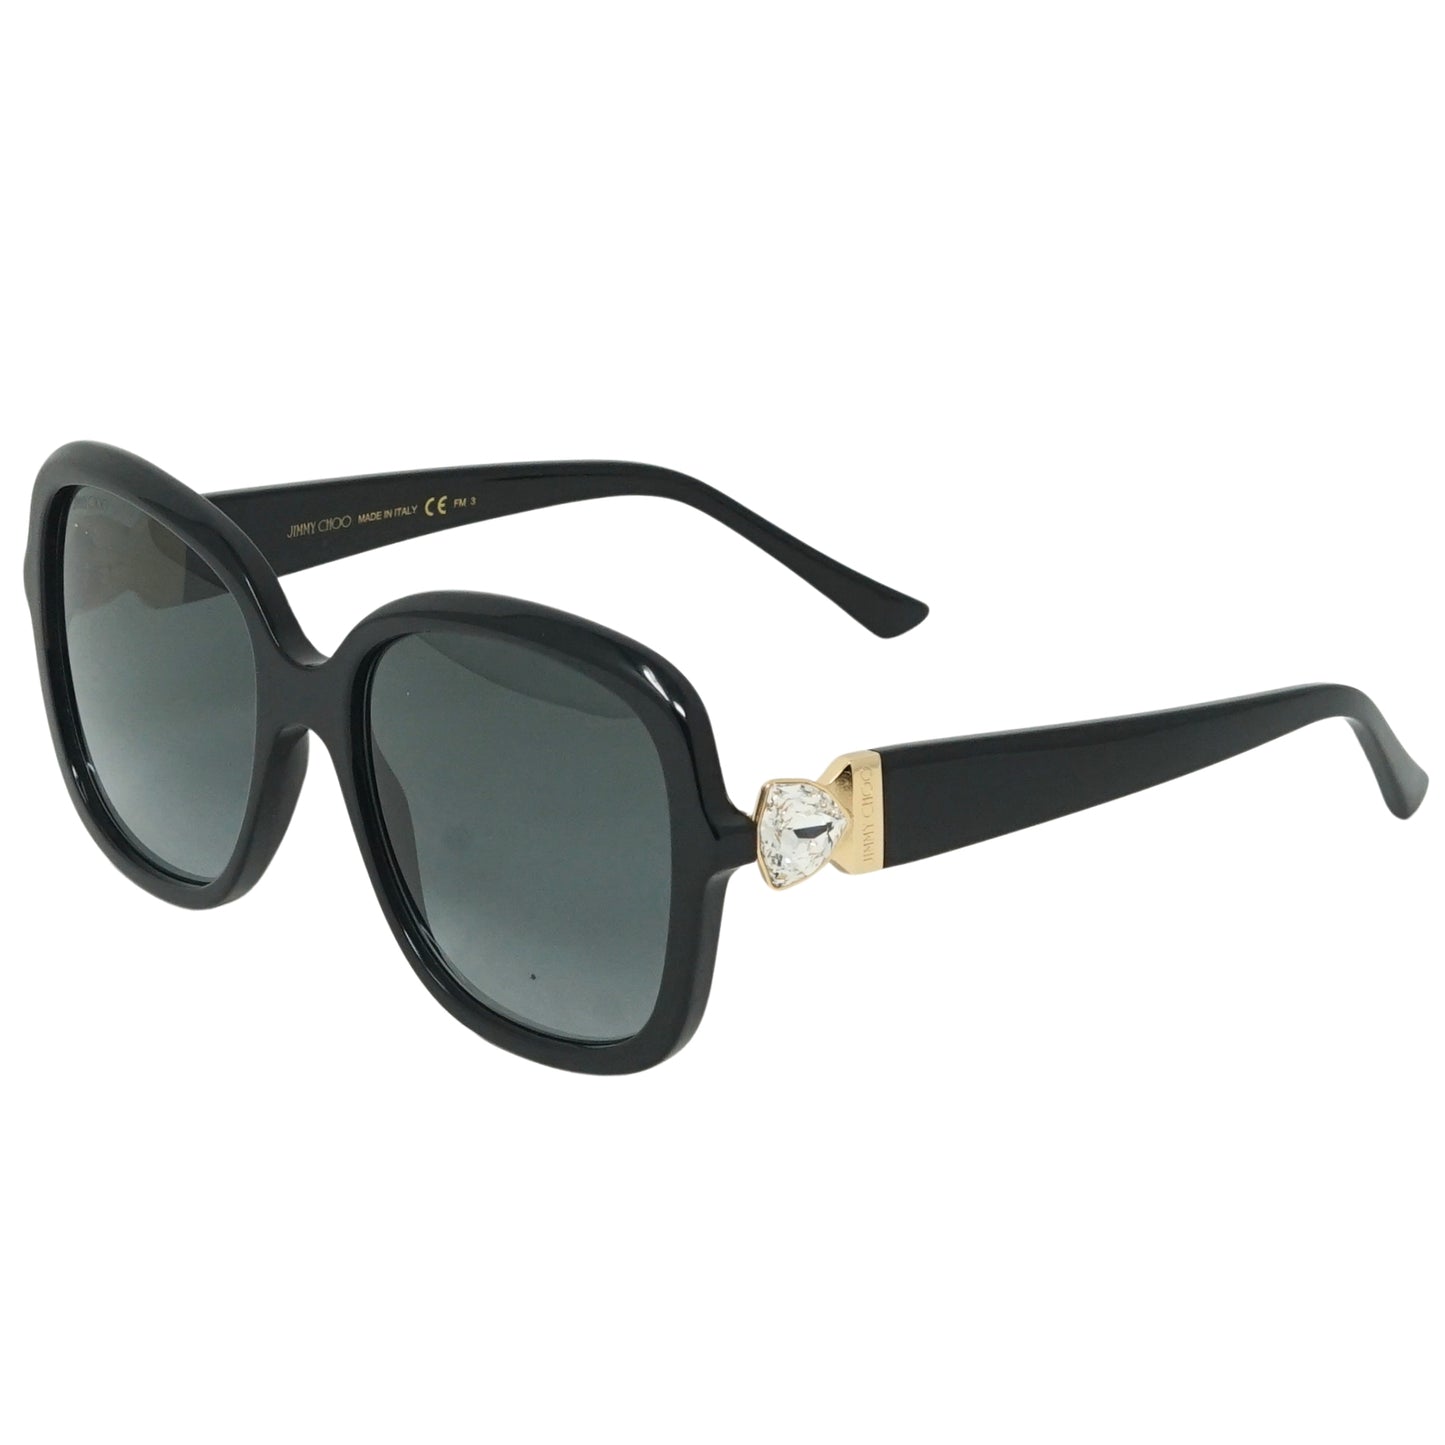 Jimmy Choo Sadie 807 Black Sunglasses